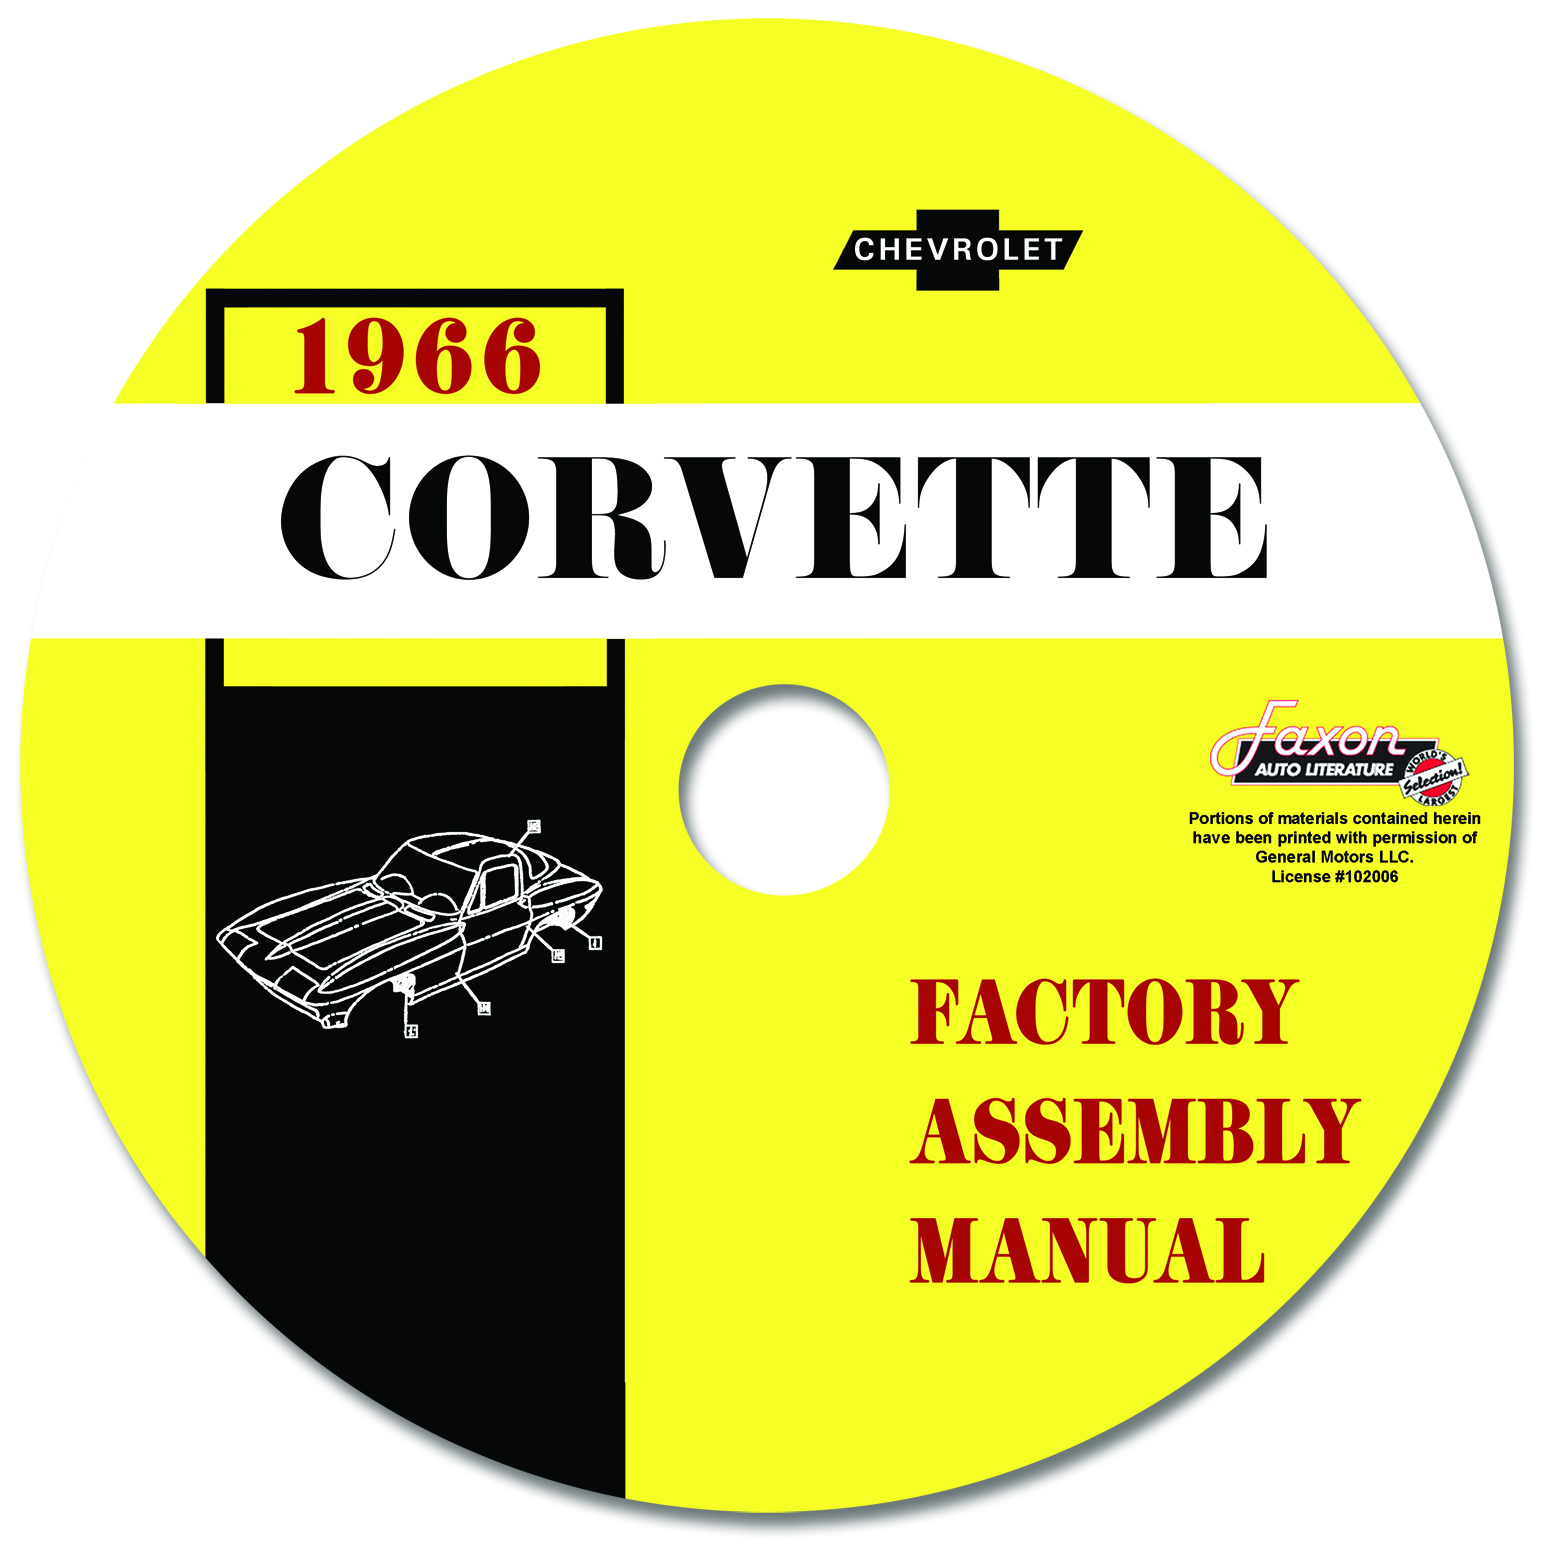 1966 Corvette Factory Assembly Manual CD-ROM